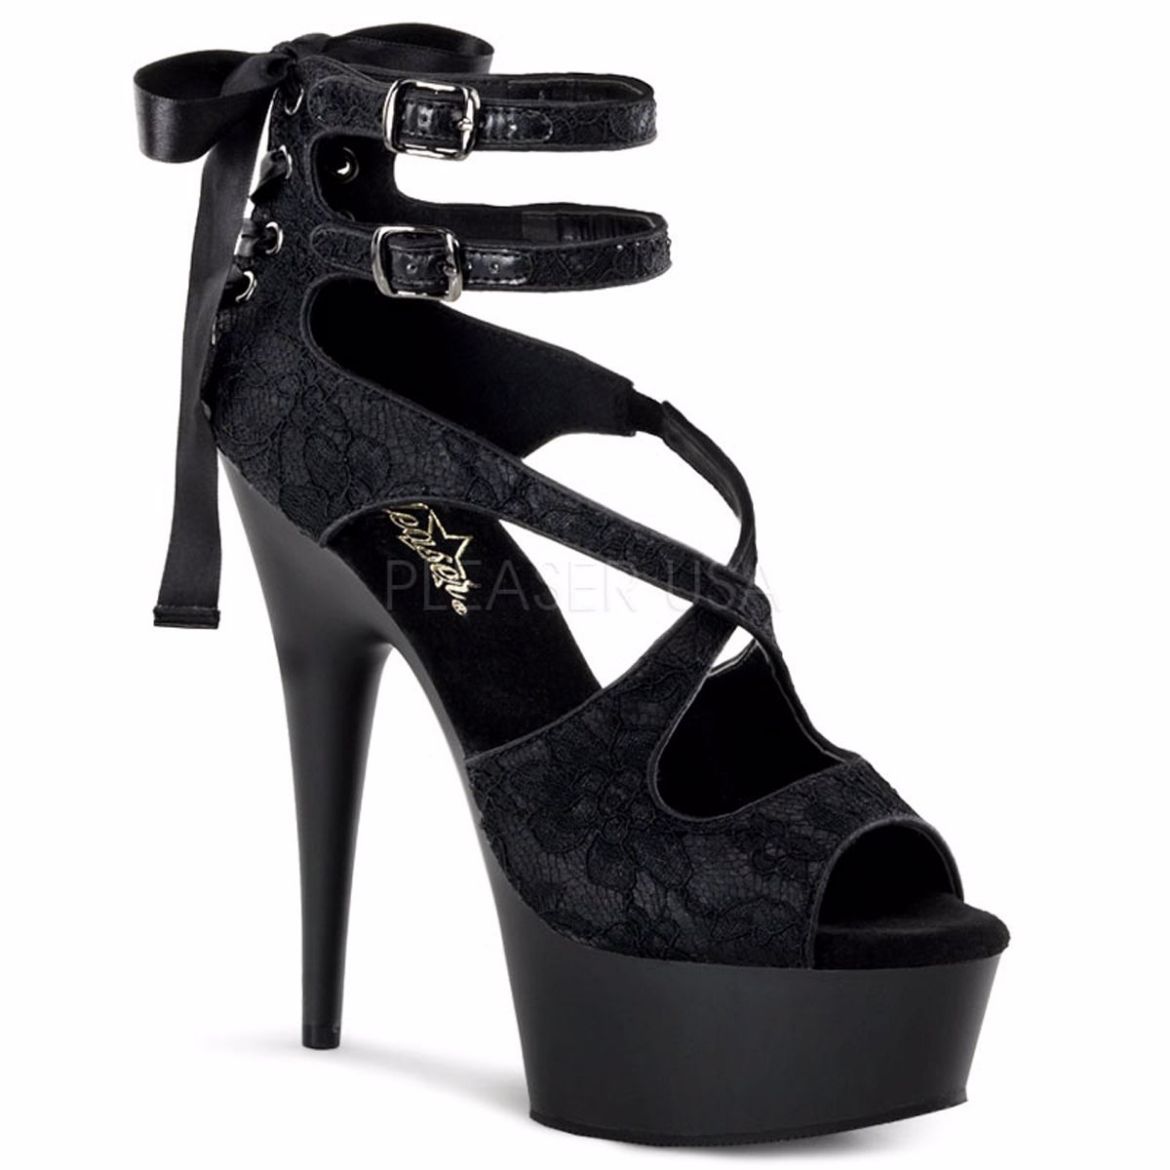 Product image of Pleaser Delight-678Lc Black Satin-Lace/Black Matte, 6 inch (15.2 cm) Heel, 1 3/4 inch (4.4 cm) Platform Sandal Shoes